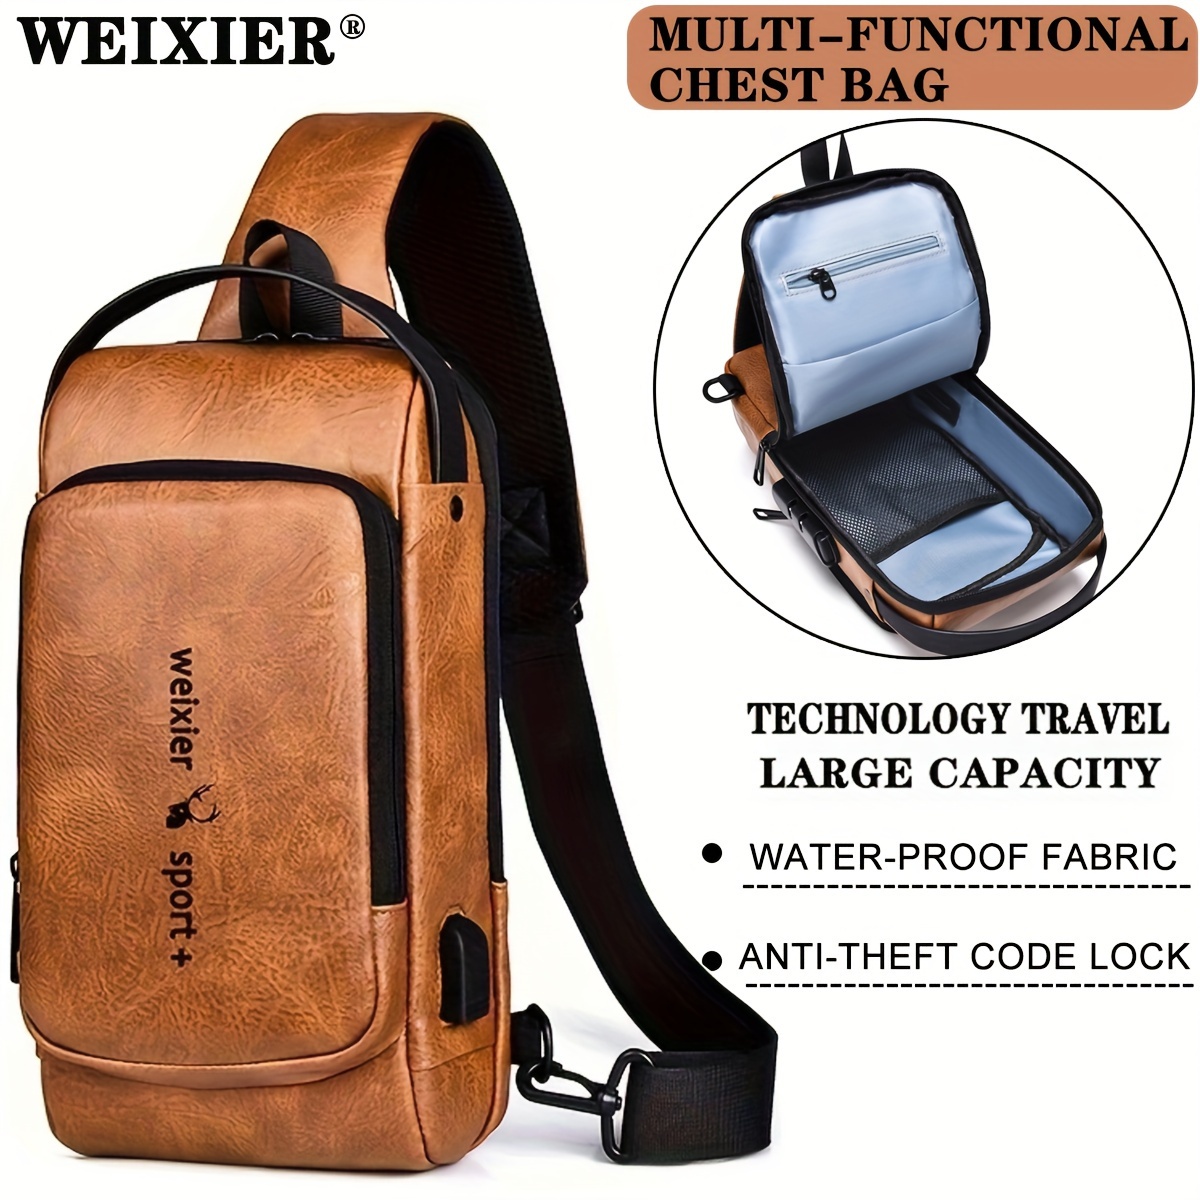 Aucuu Laptop Bag for Women, 15.6-inch Handbags PU Leather Tote Bag